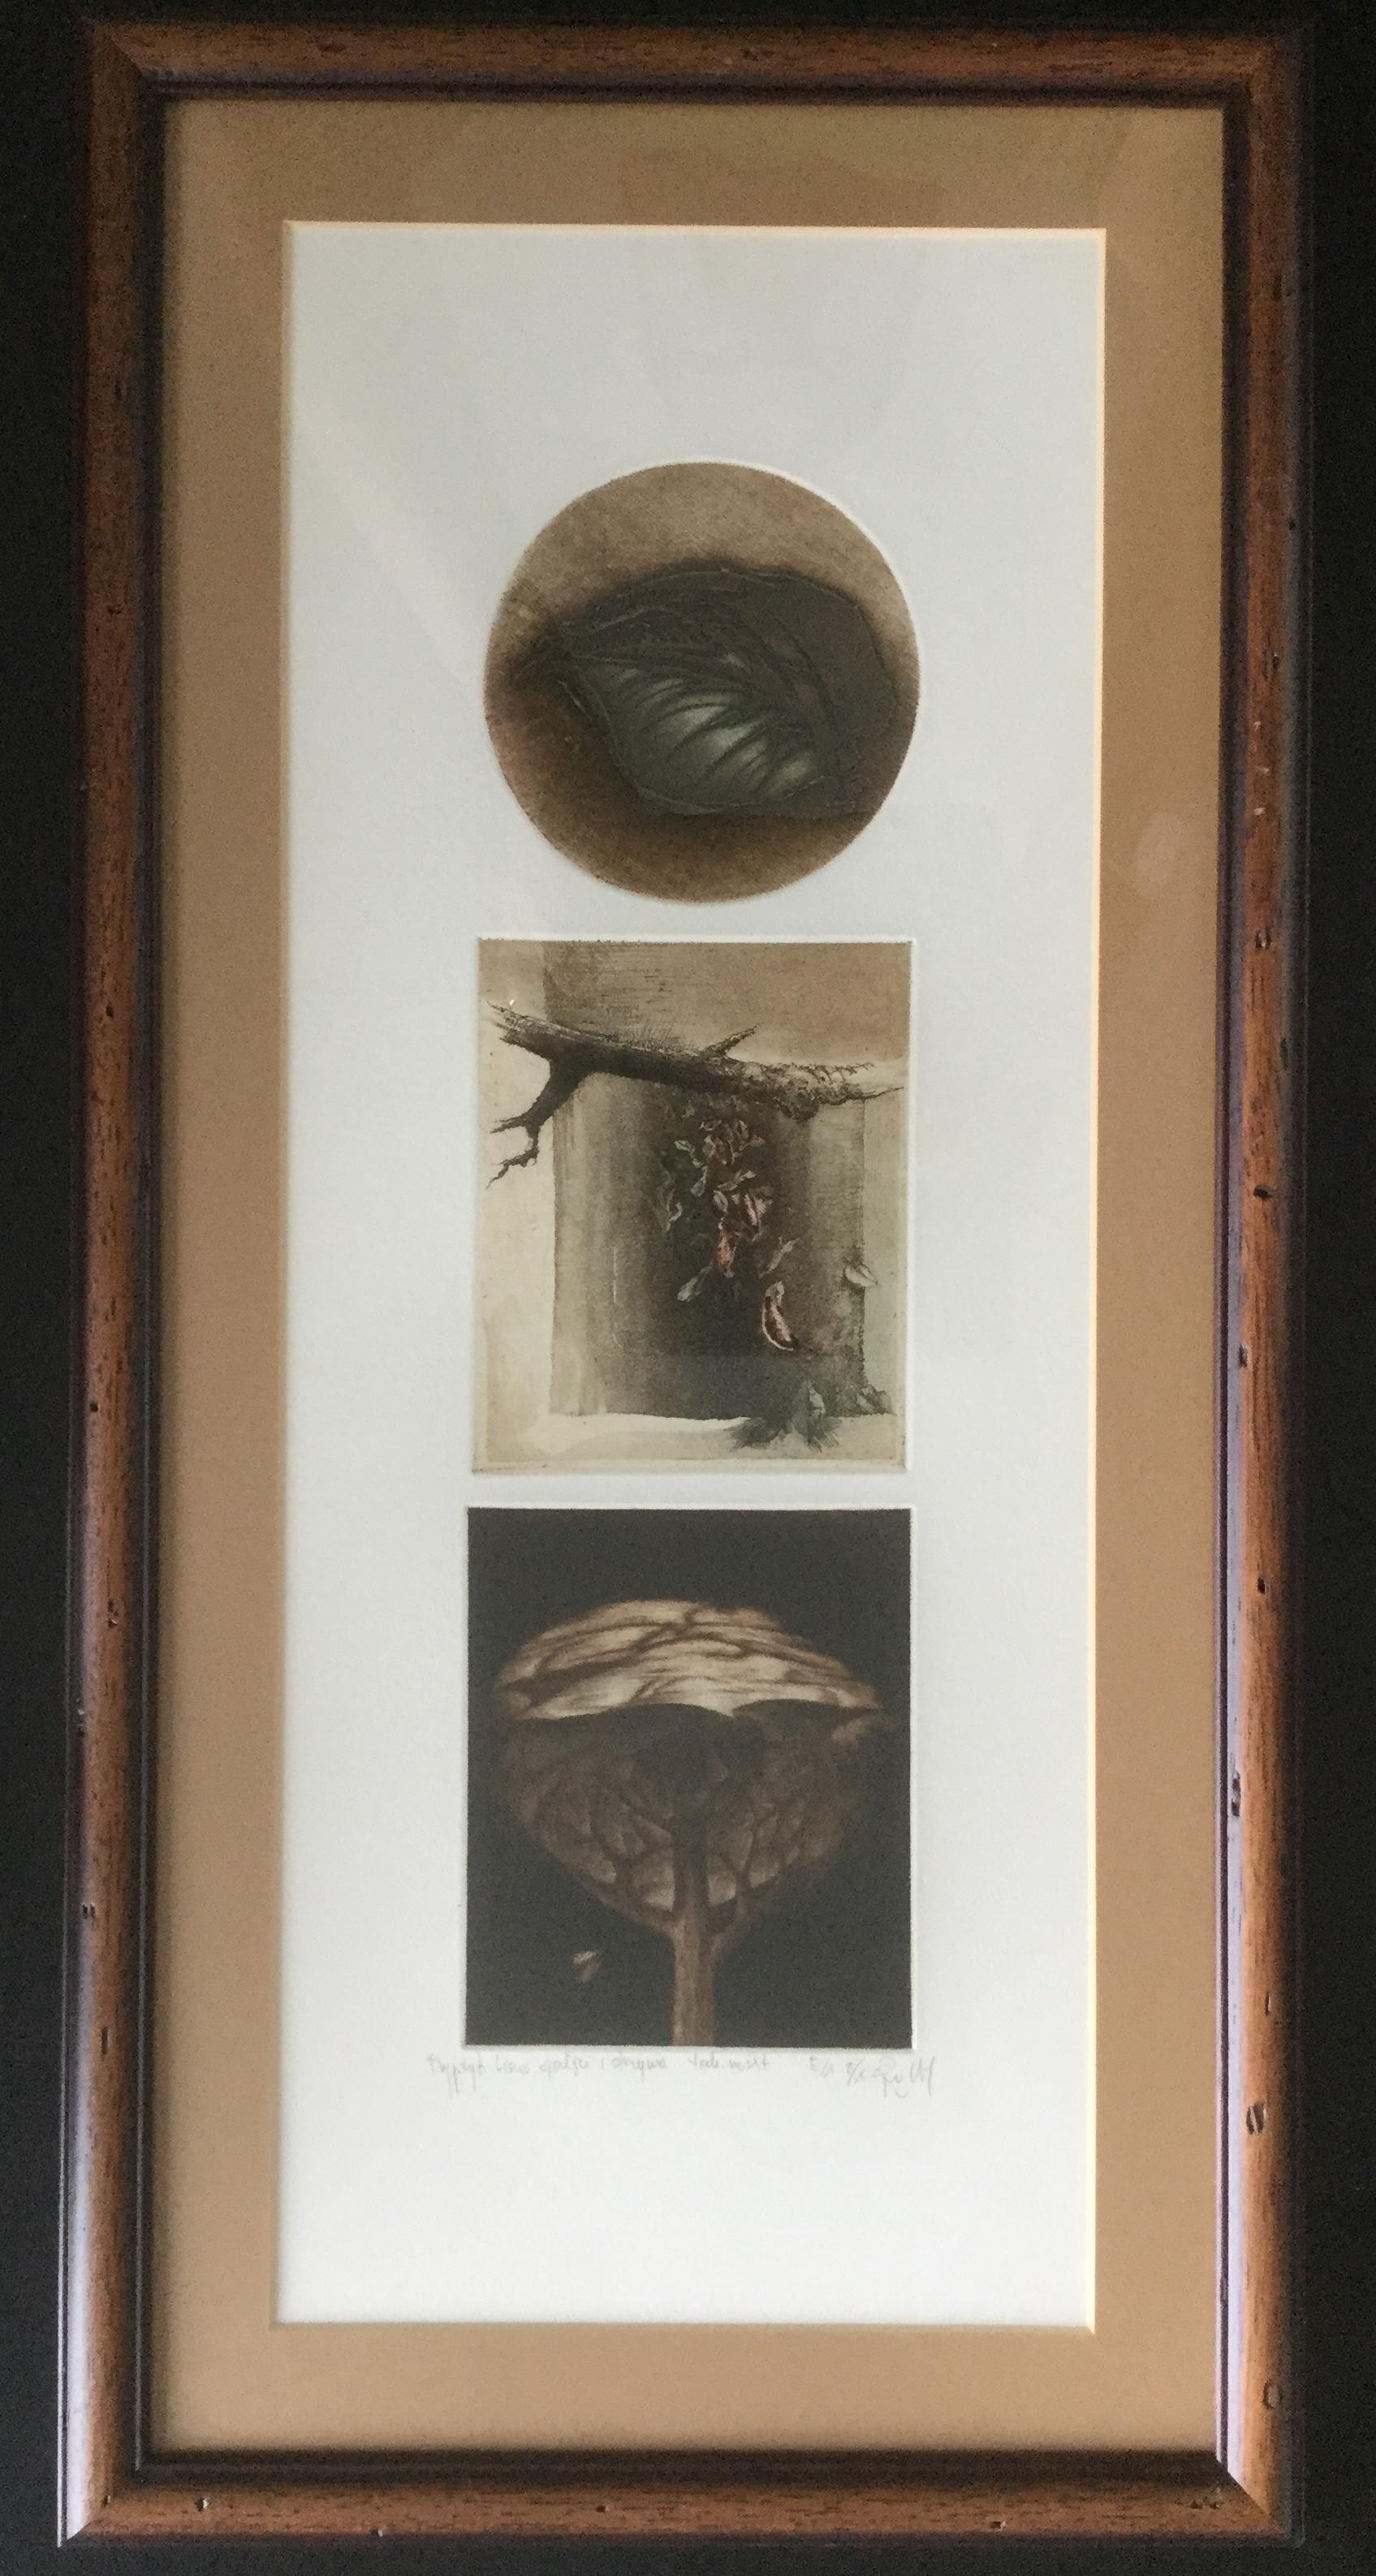 Leaves, Twigs and Trees Triptychon - Figuratives Mixed Med Print, kleine Auflage 2/X (Braun), Landscape Print, von Andrzej Juchniewicz